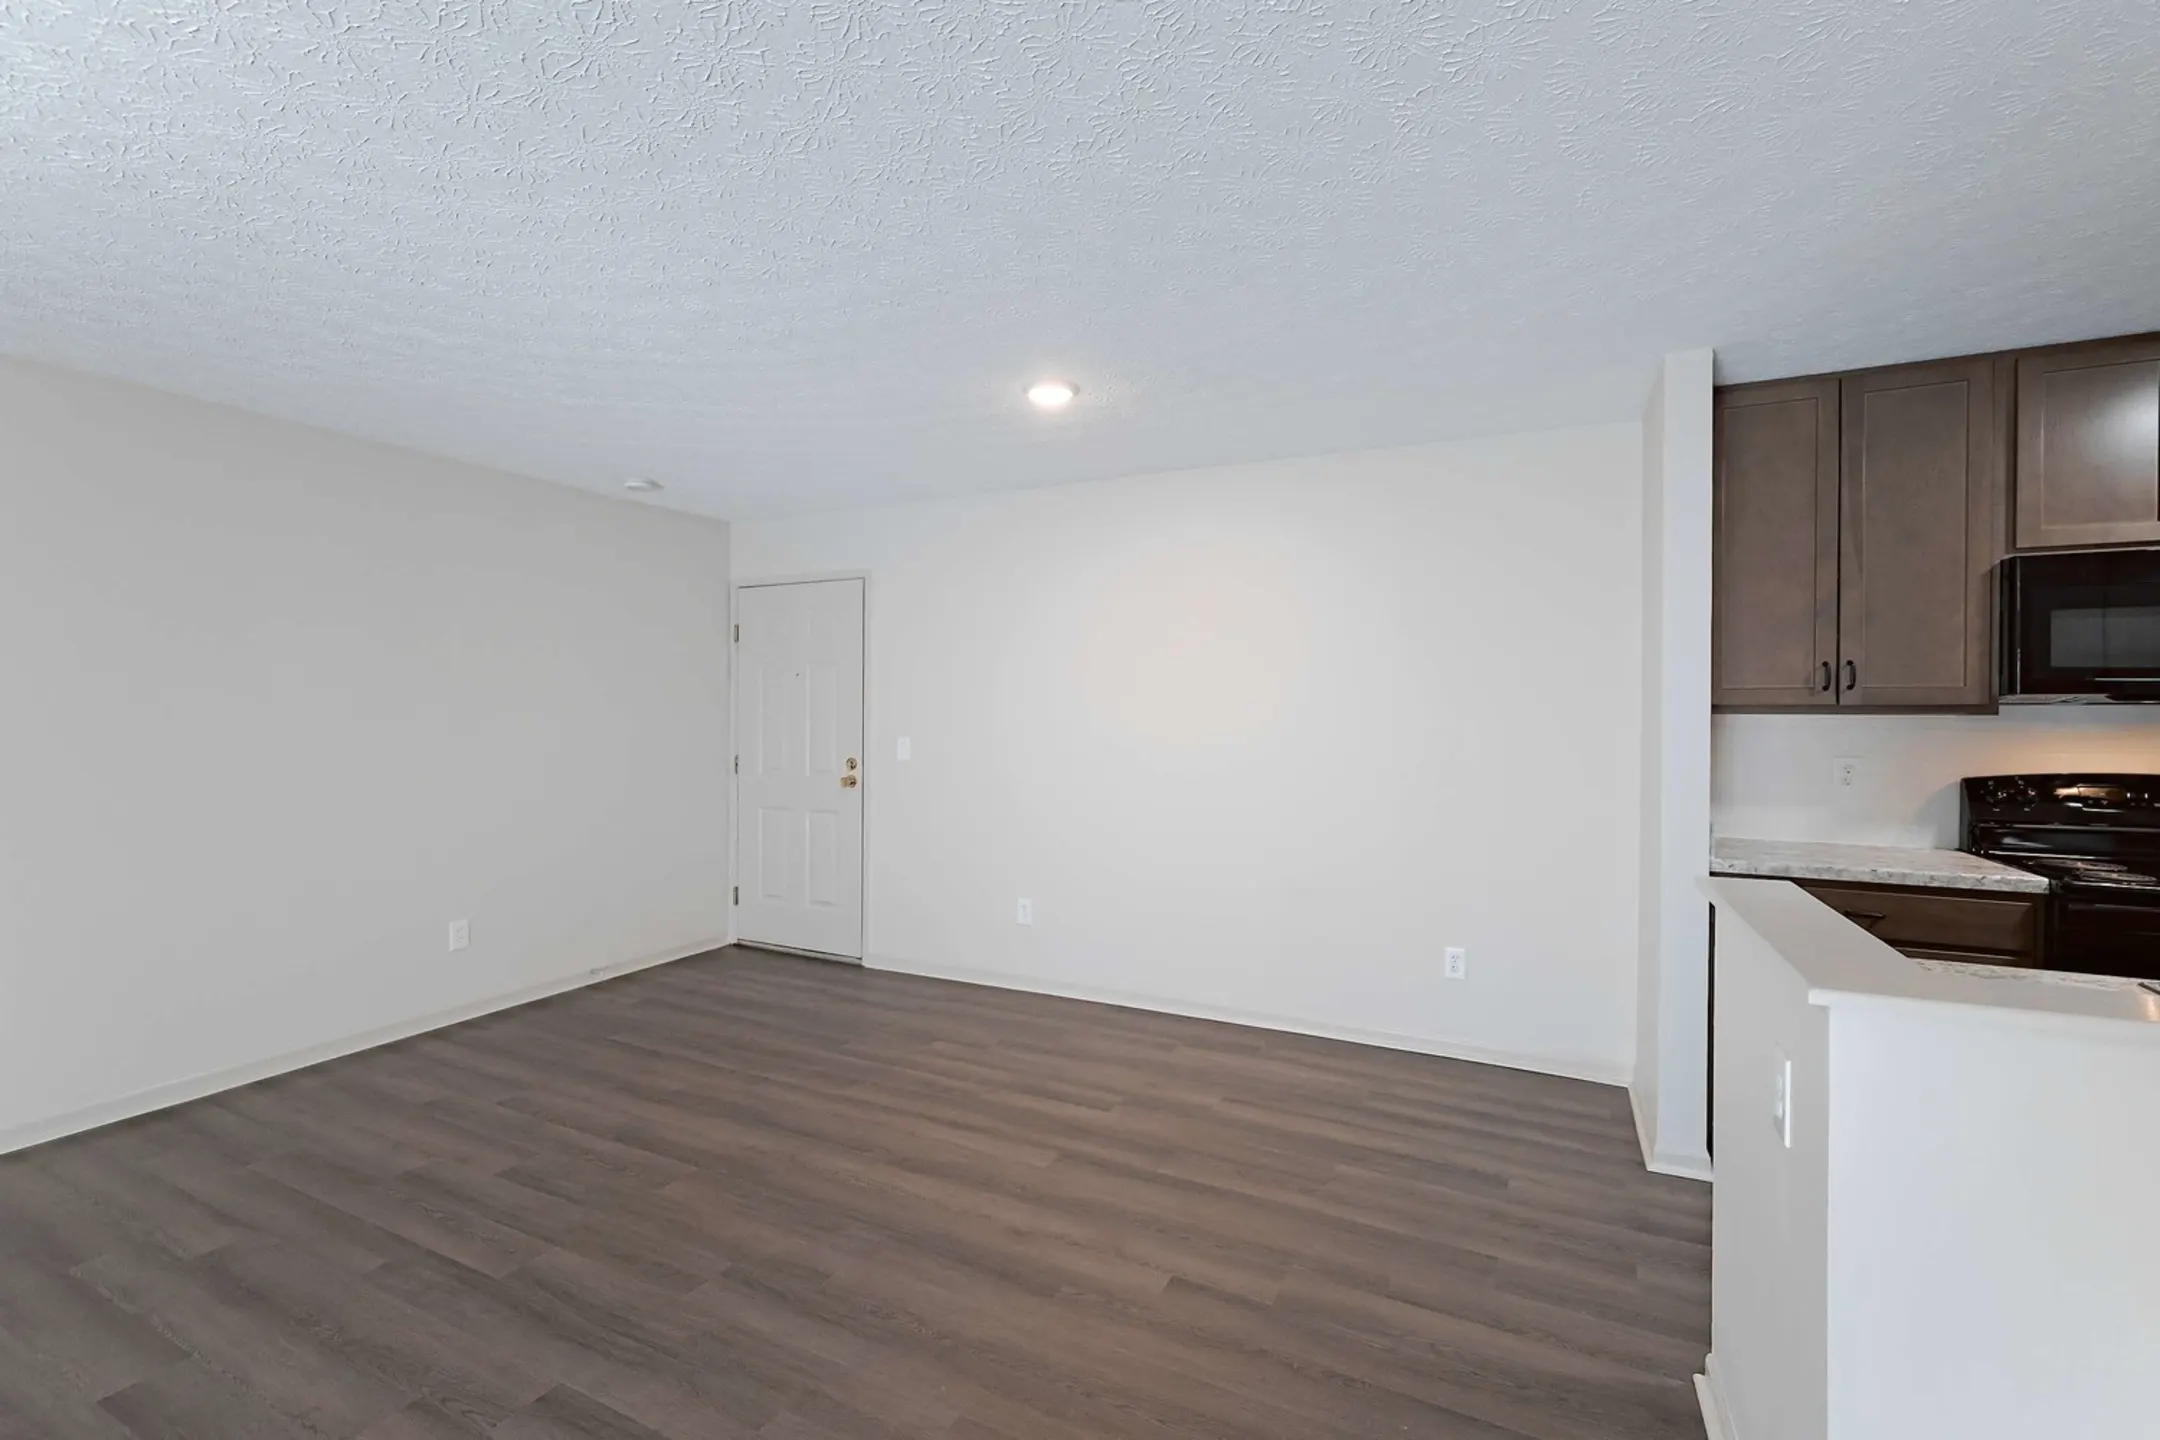 Living Room - Deer Ridge Apartments - Loveland, OH